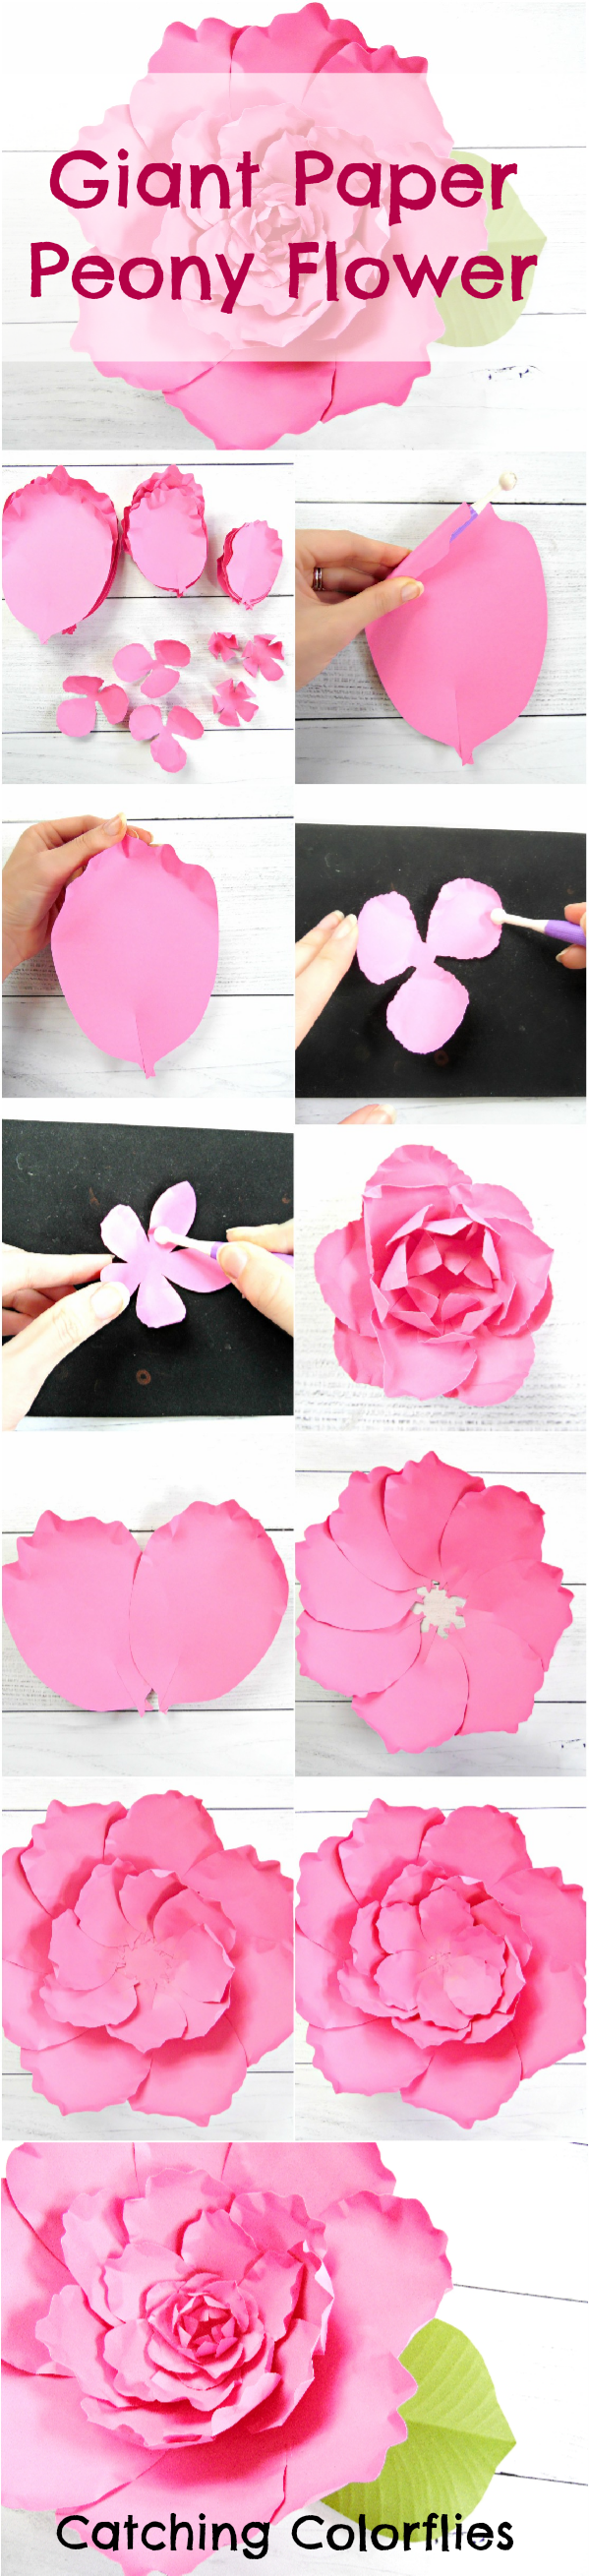 Giant paper peony flower tutorial. DIY paper flowers. Printable peony flower templates